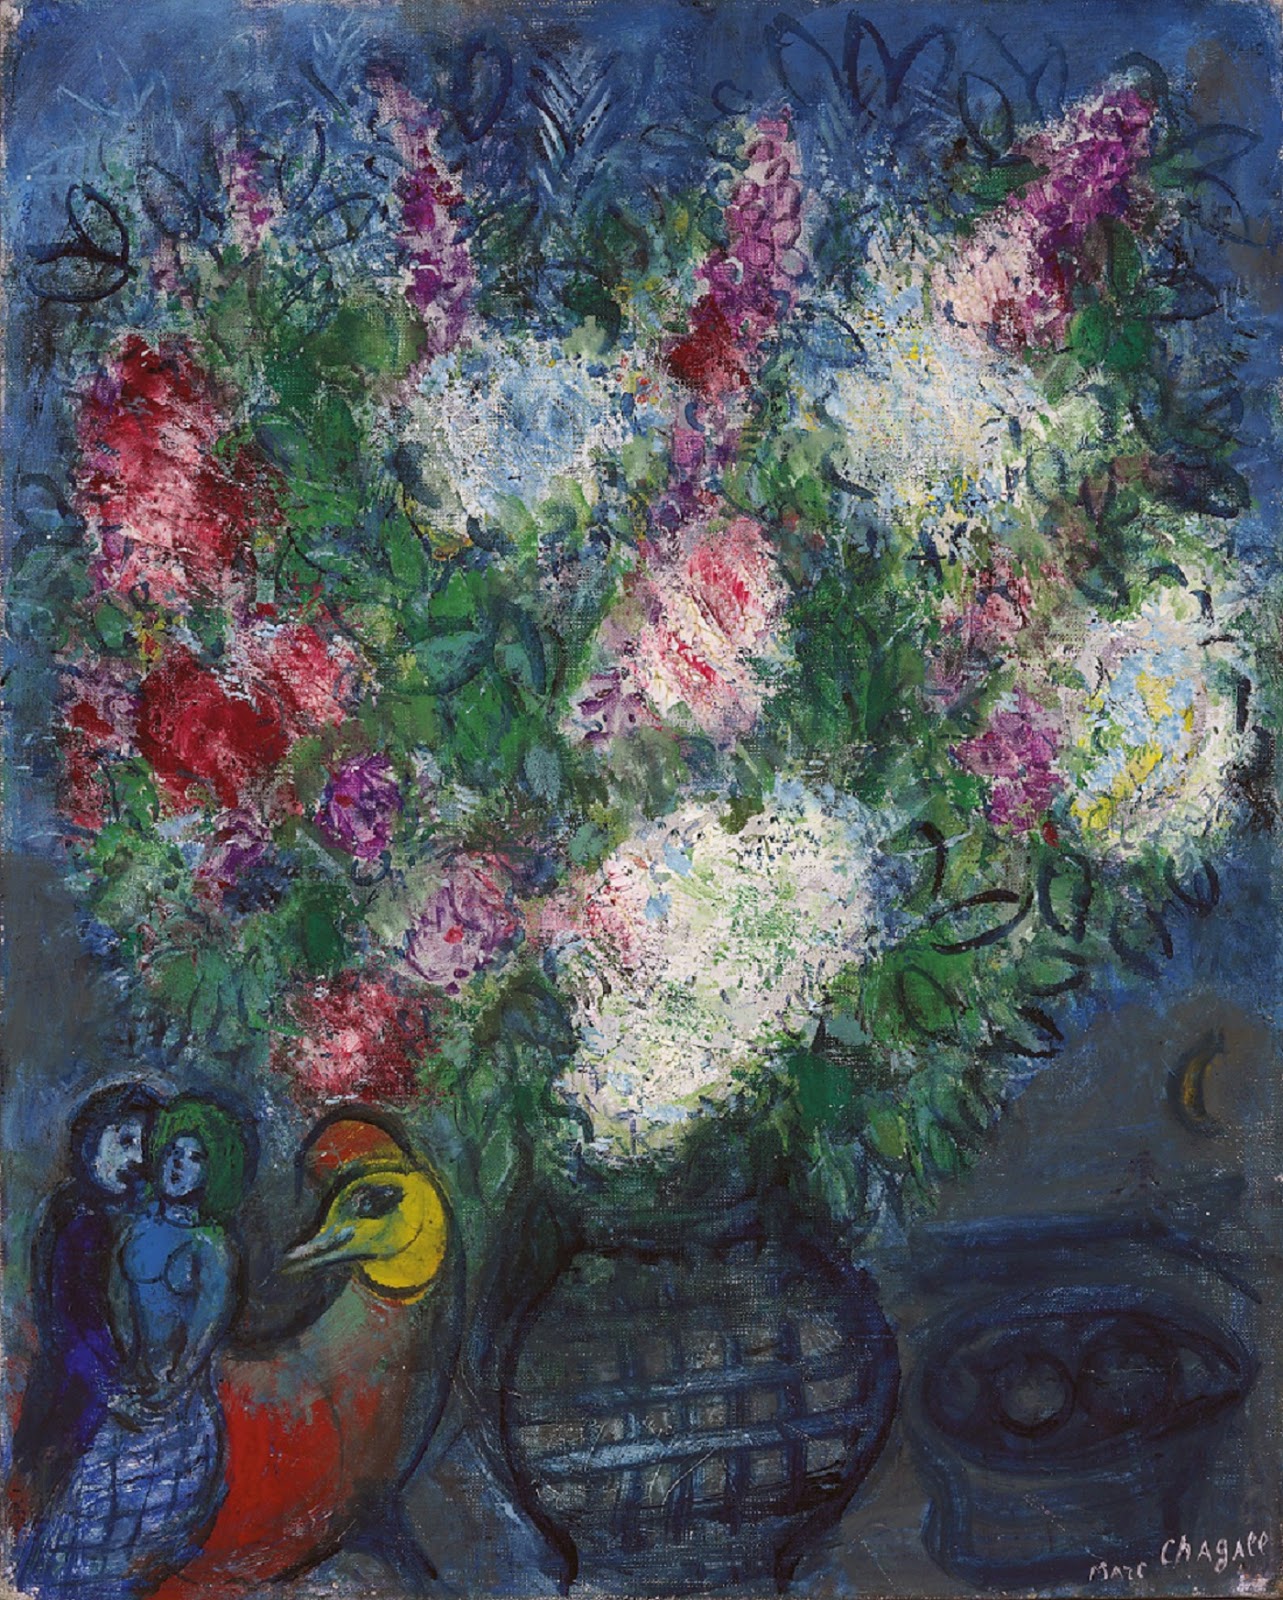 Marc+Chagall-1887-1985 (413).jpg